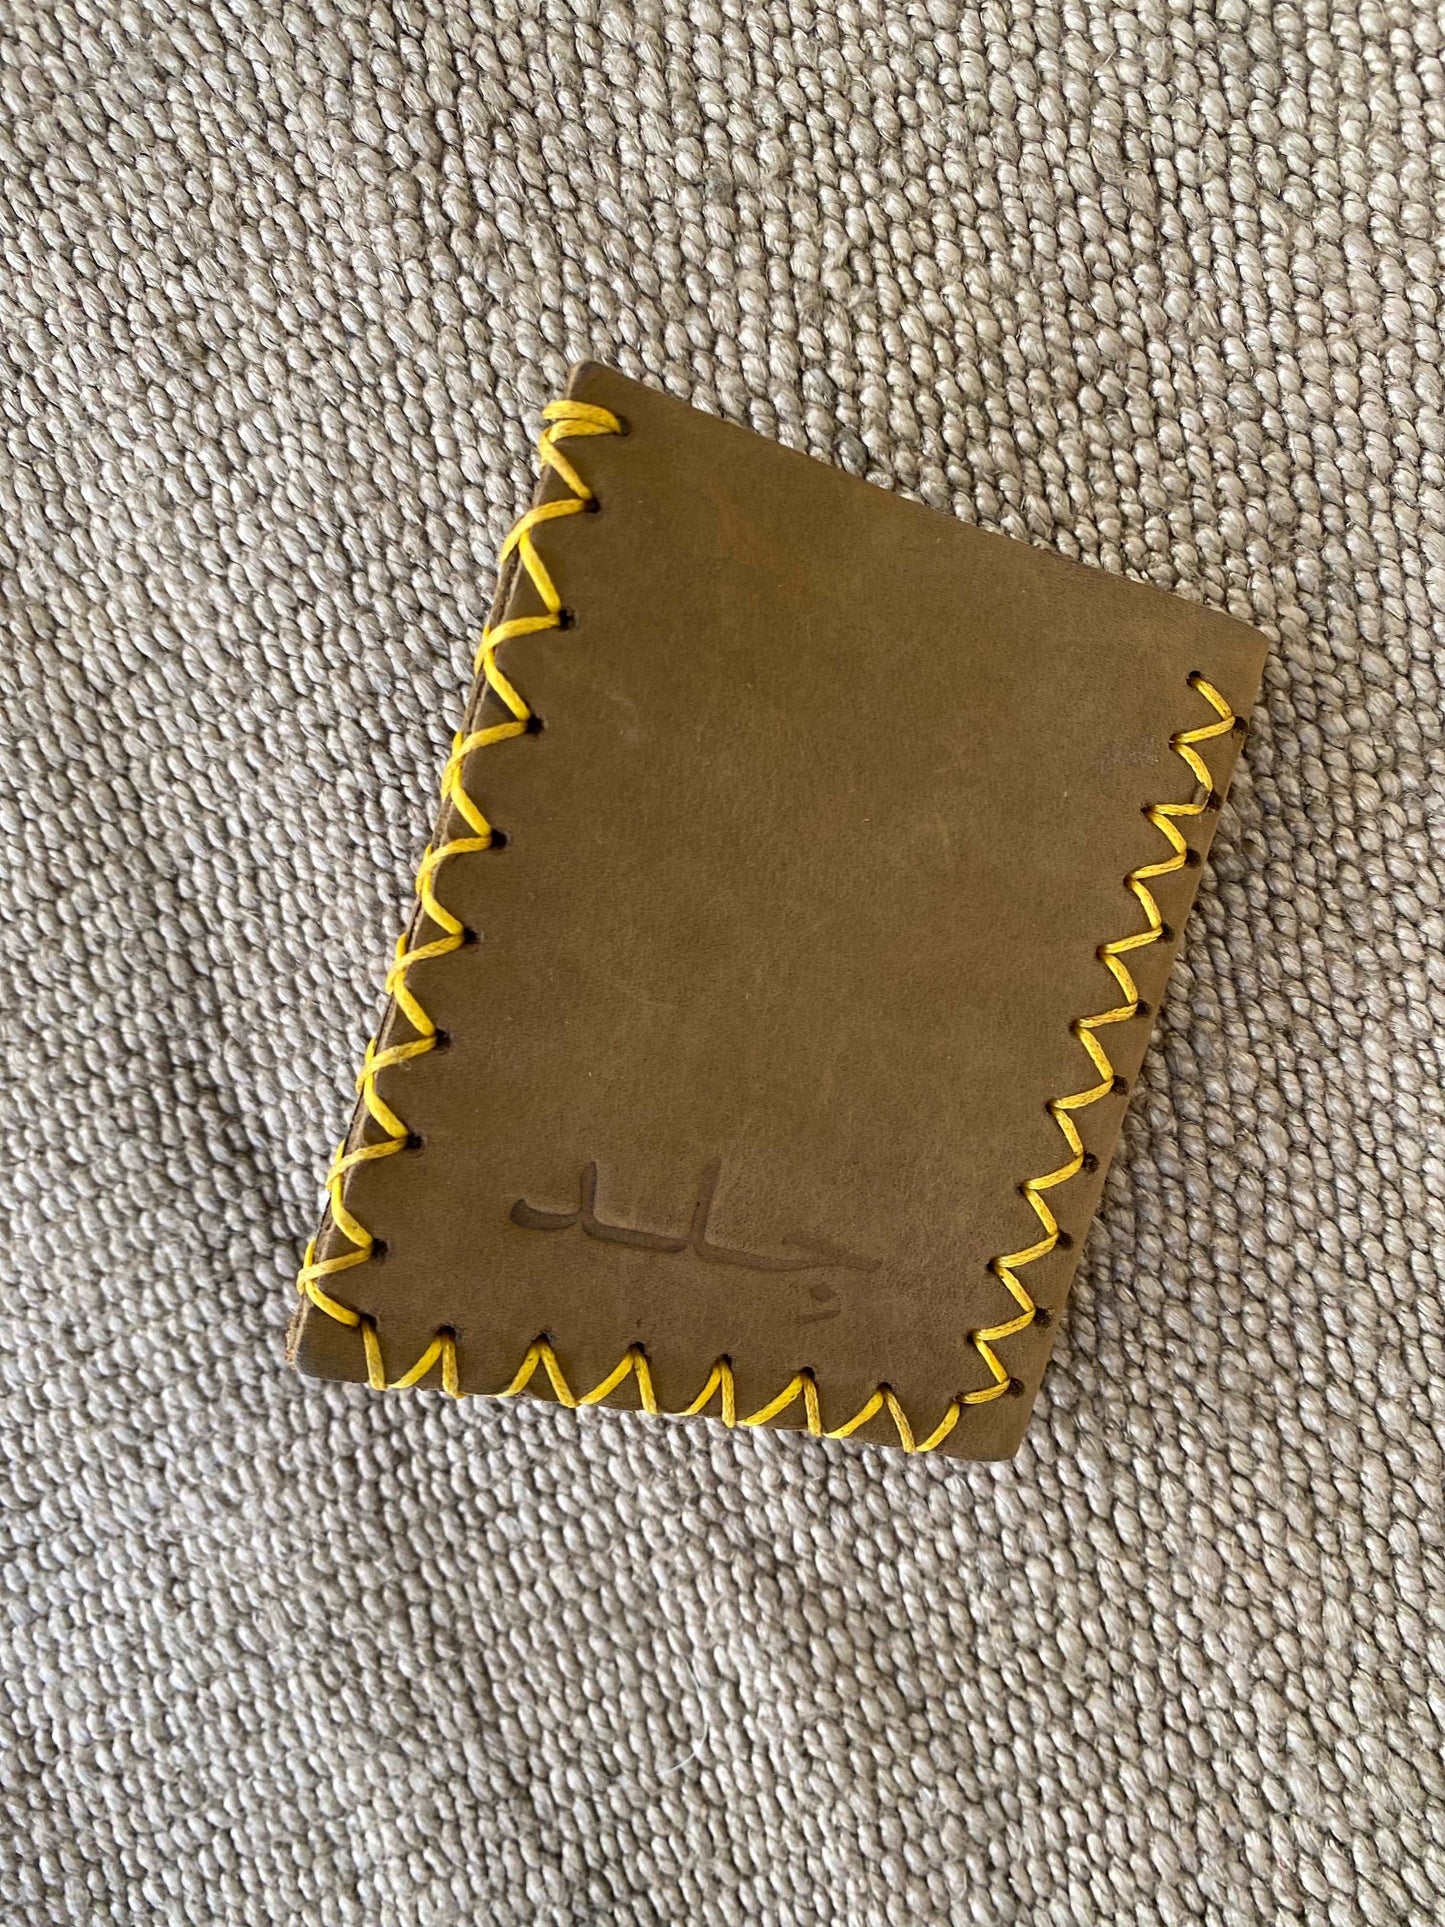 handmade-leather-wallet-jelld-palestine-hebron